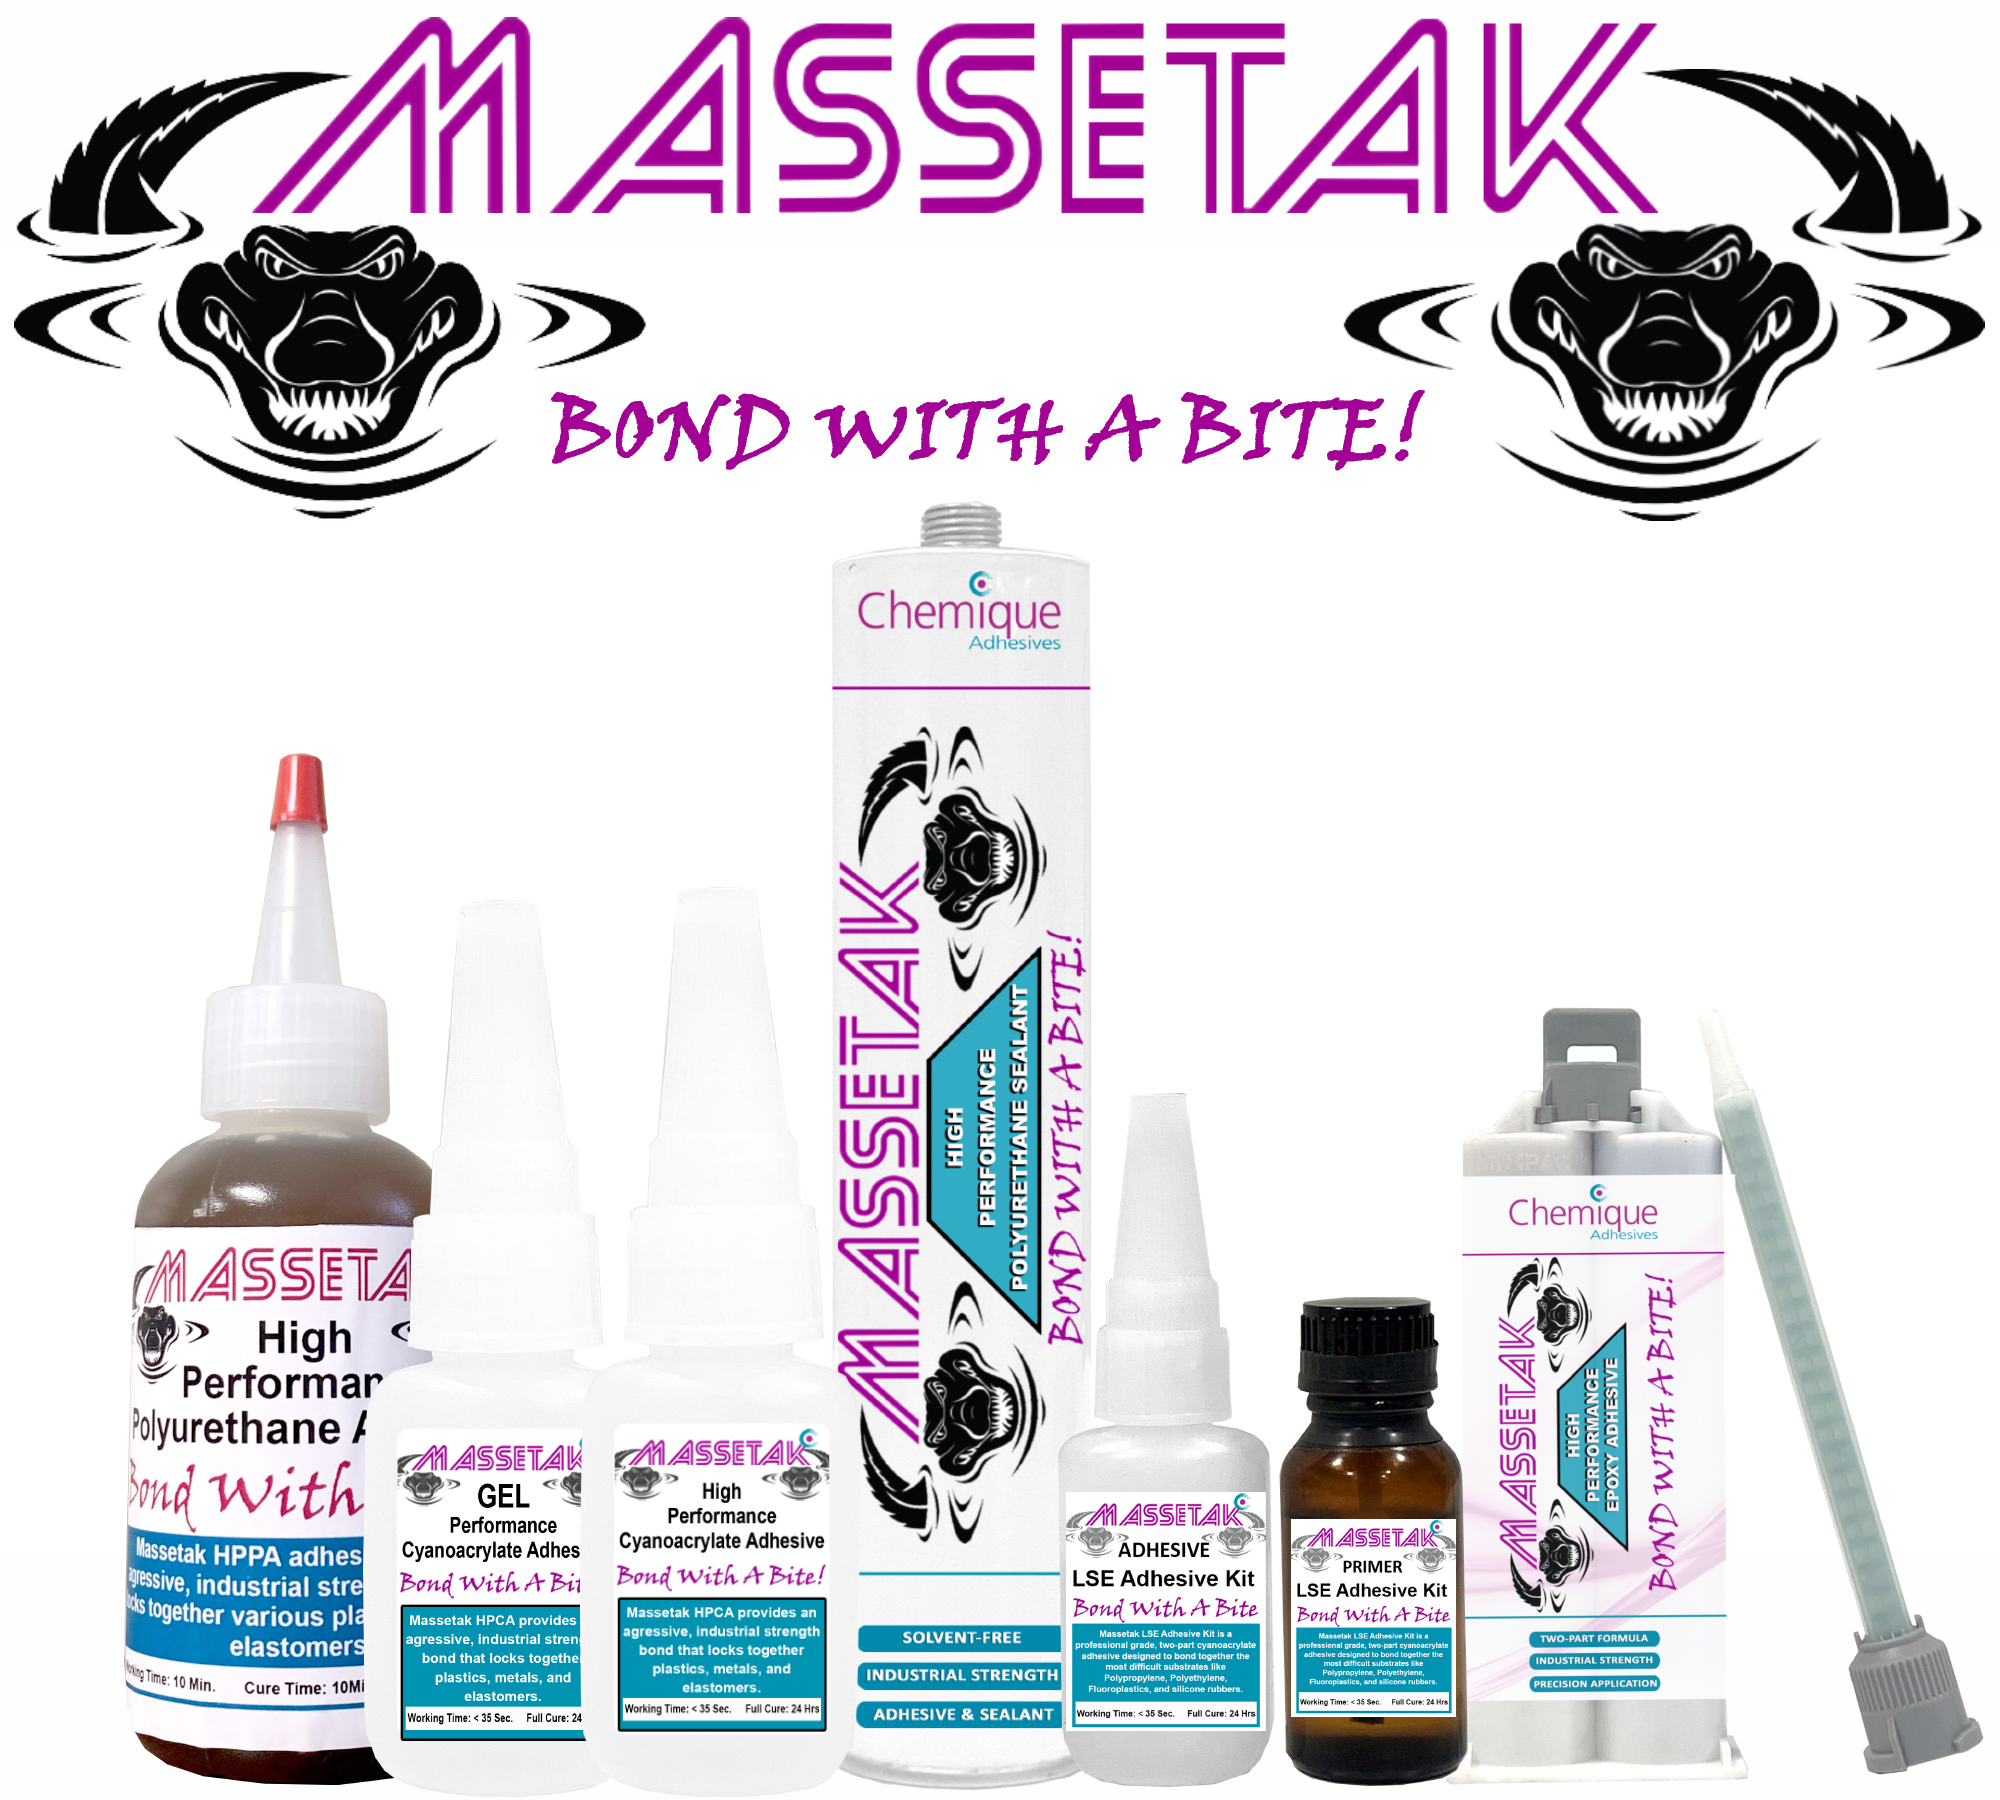 The New Massetak Professional-Grade Adhesive and Sealant Range